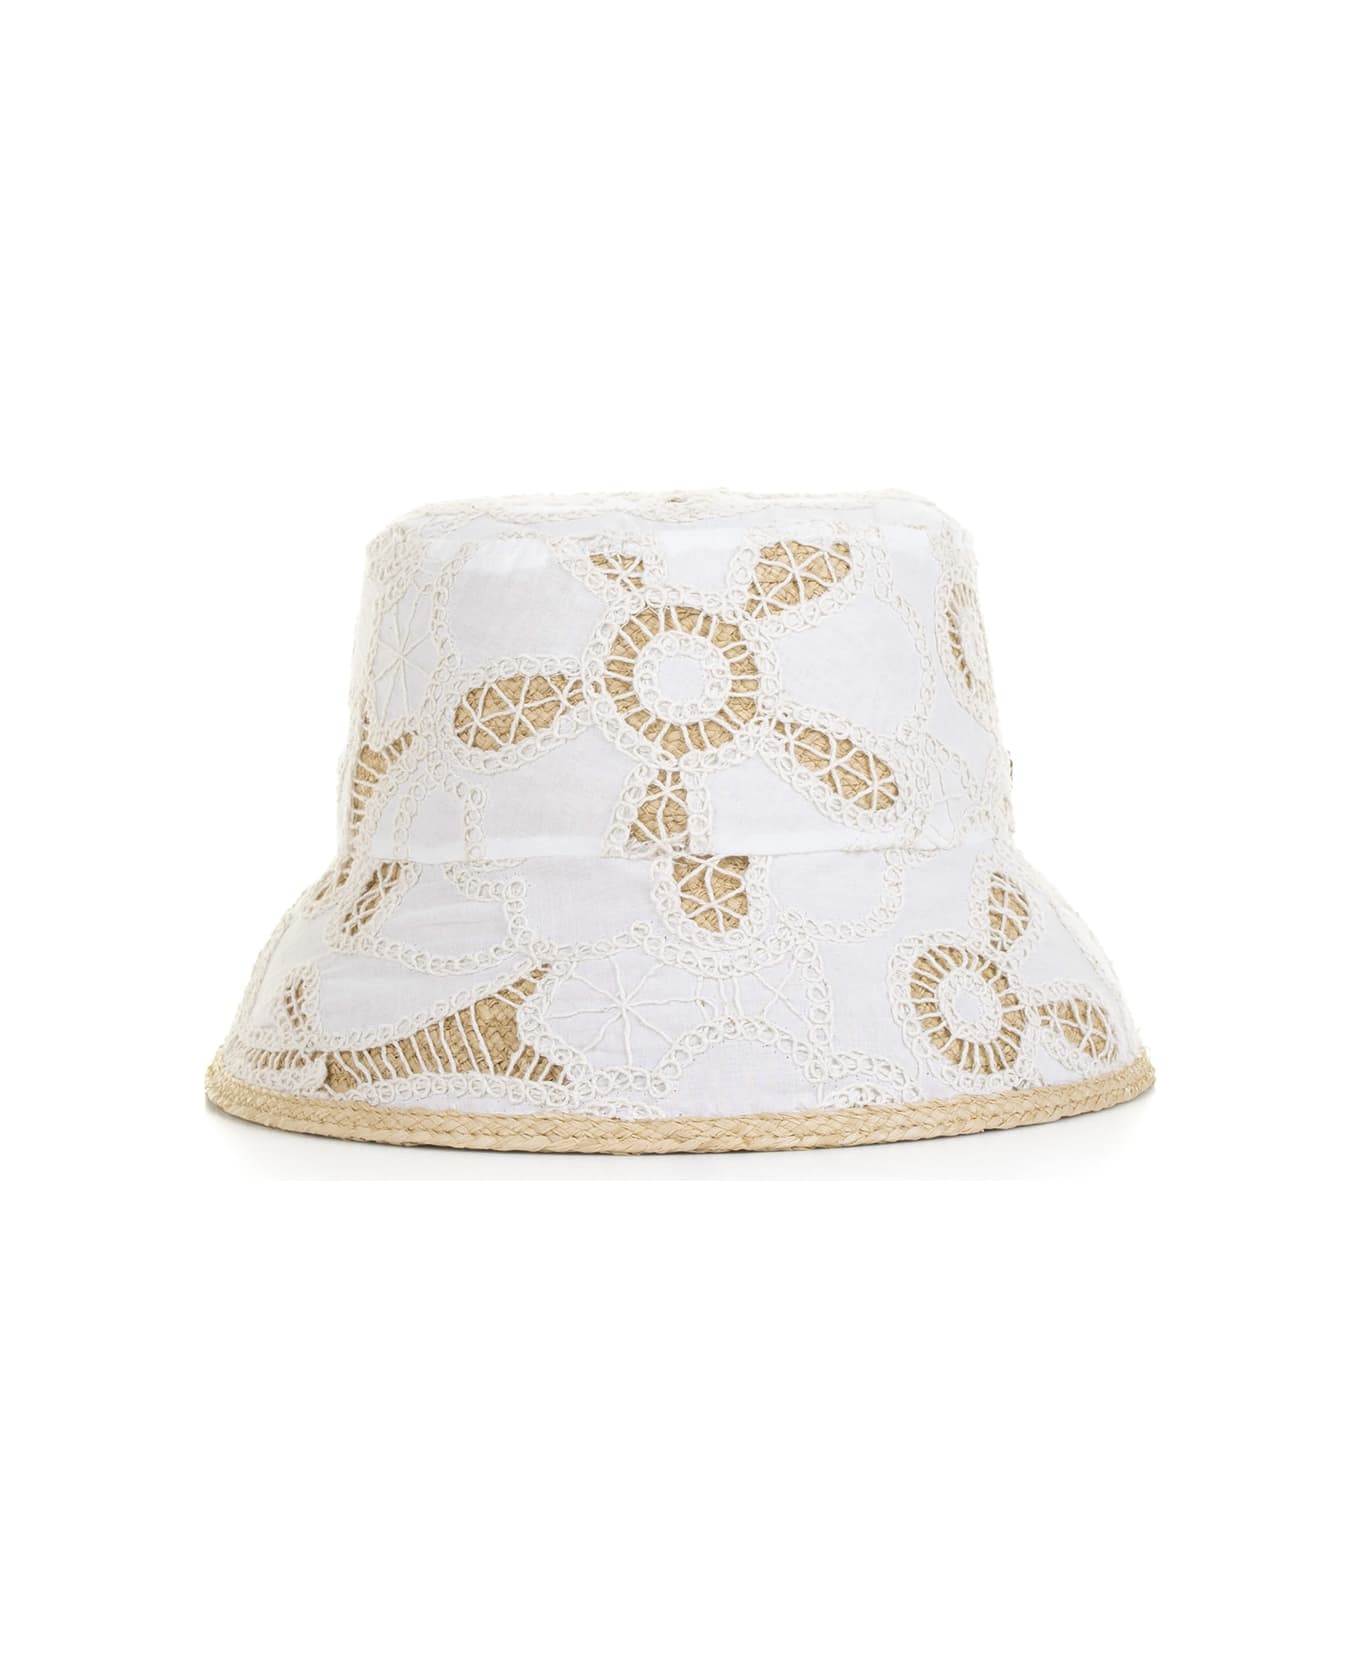 Helen Kaminski Hat - OFF WHITE 帽子